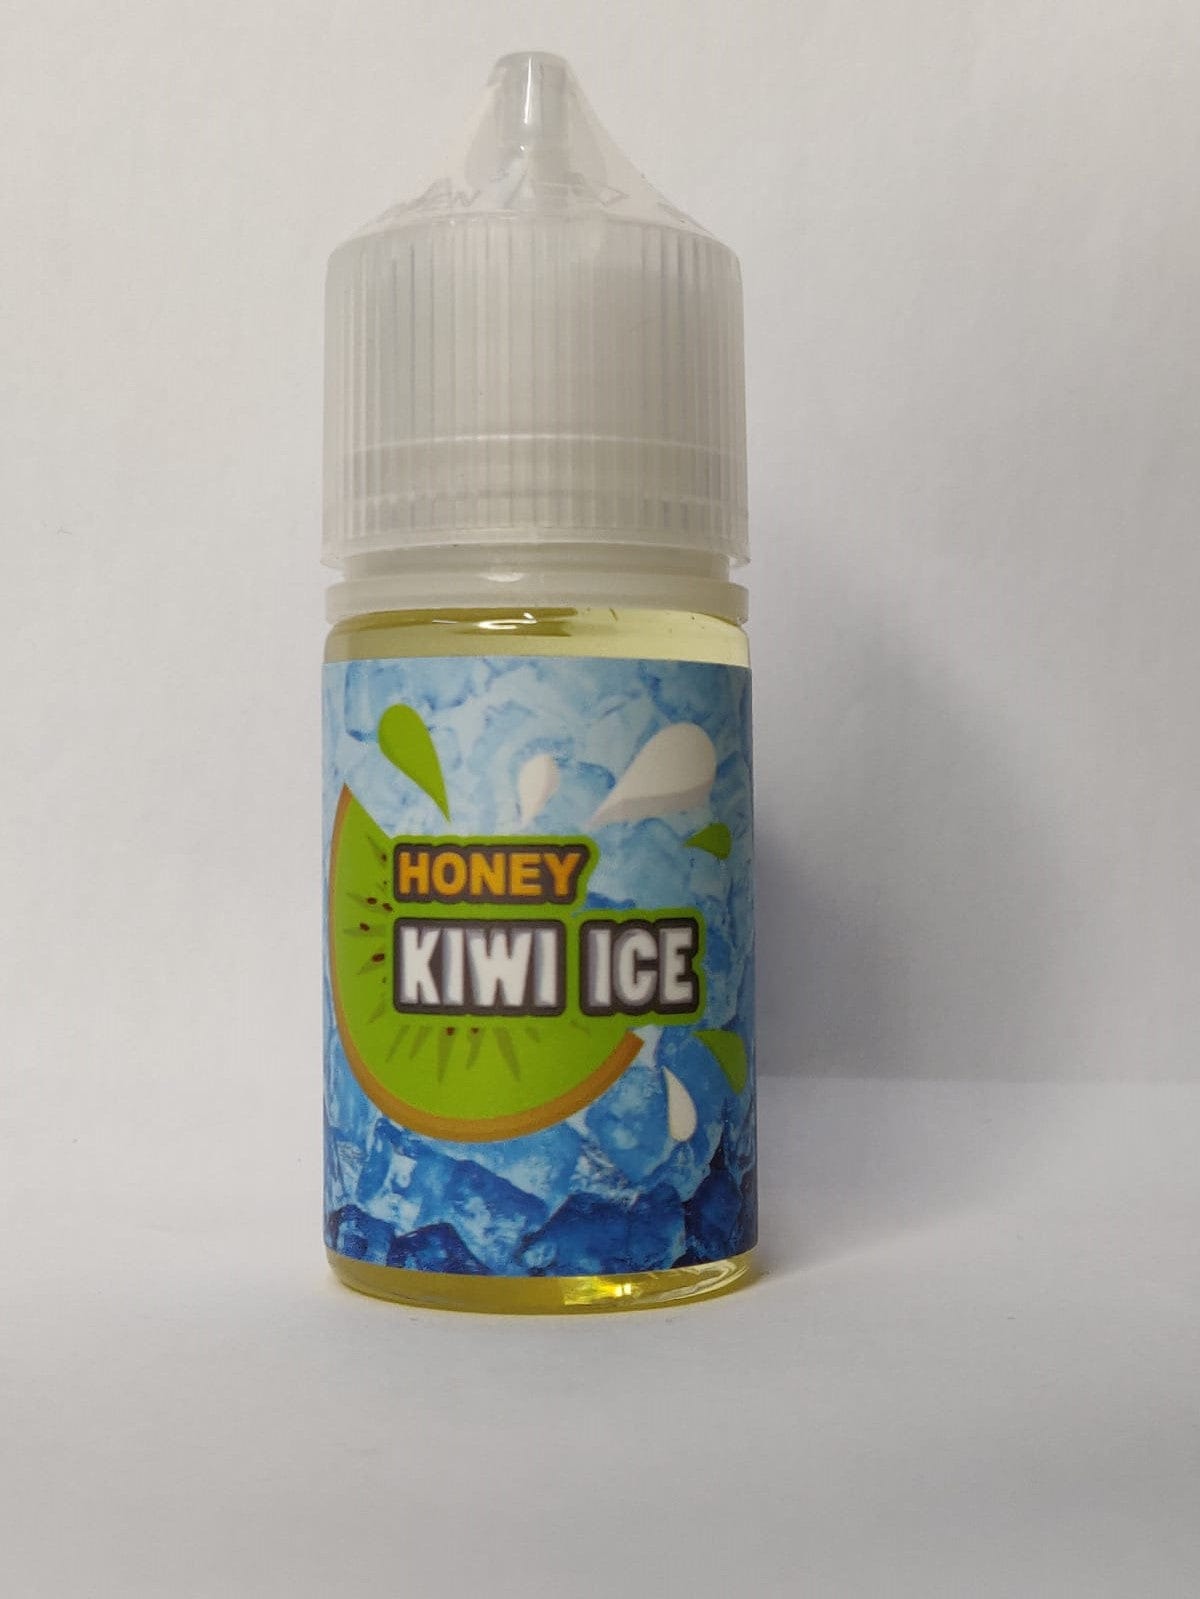 Kiwi Ice By Tokyo Salt 30 ml Honey Series At Best Price In Pakistan